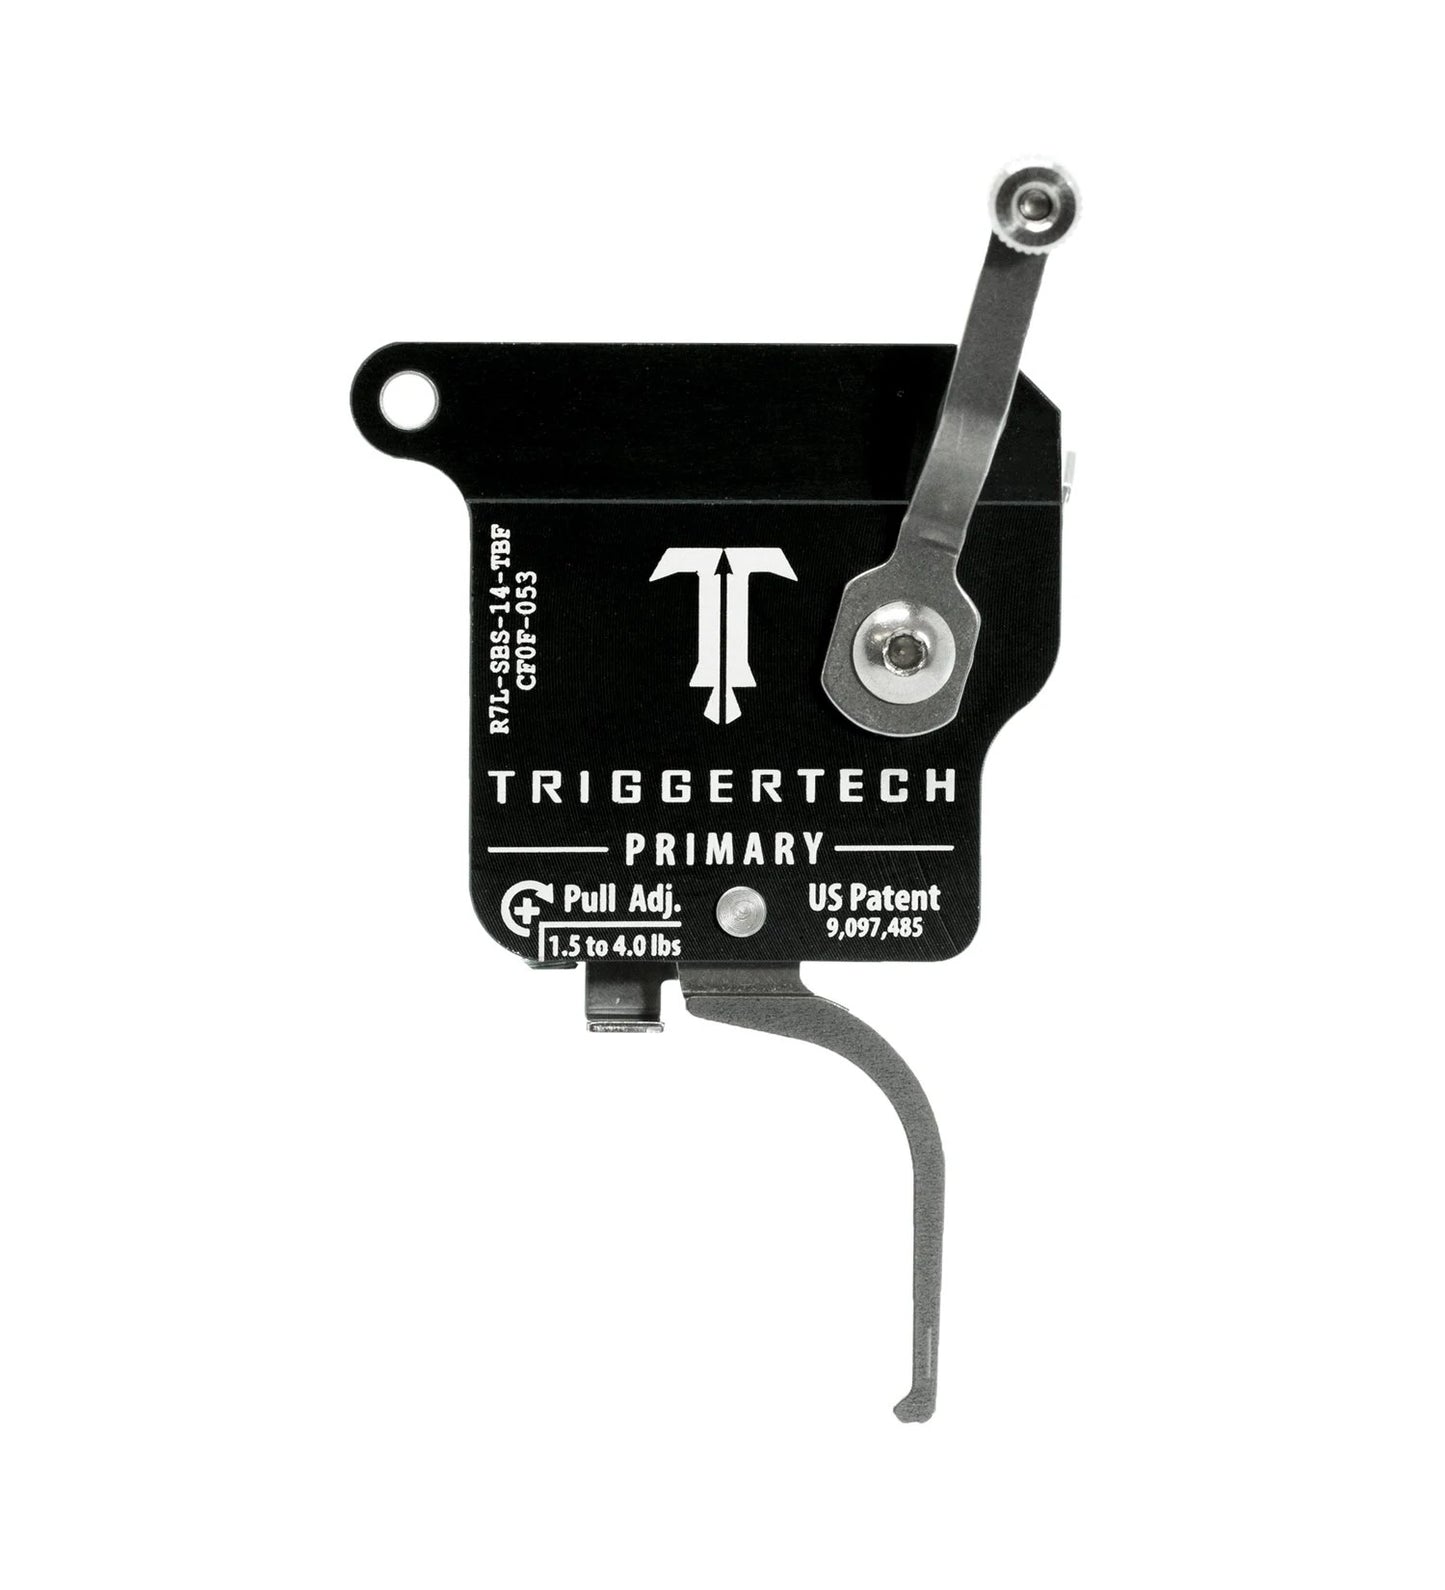 Rem 700 Primary Trigger - TriggerTech